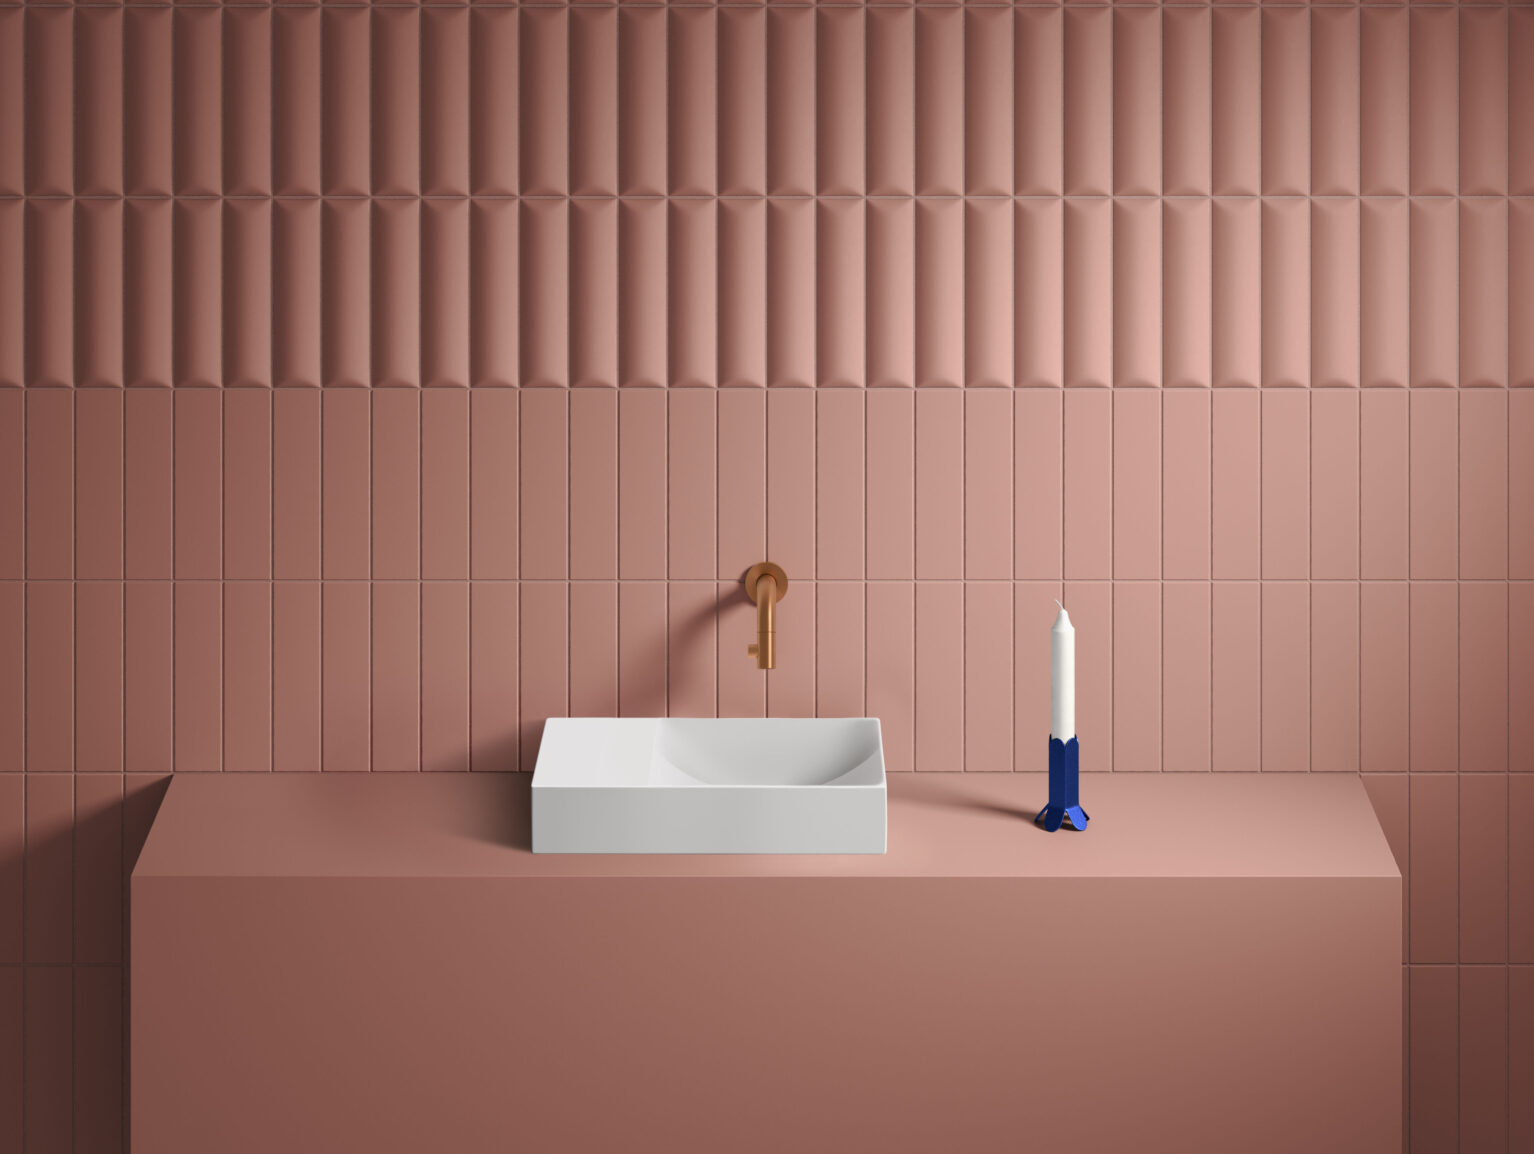 Fontein-wit-toilet-badkamer-luxe-sanitair-clou-CL0302161L-mat-keramiek-38cm-Vale-Kaldur-brons-koudwaterkaan-CL060500183-roze-tegels